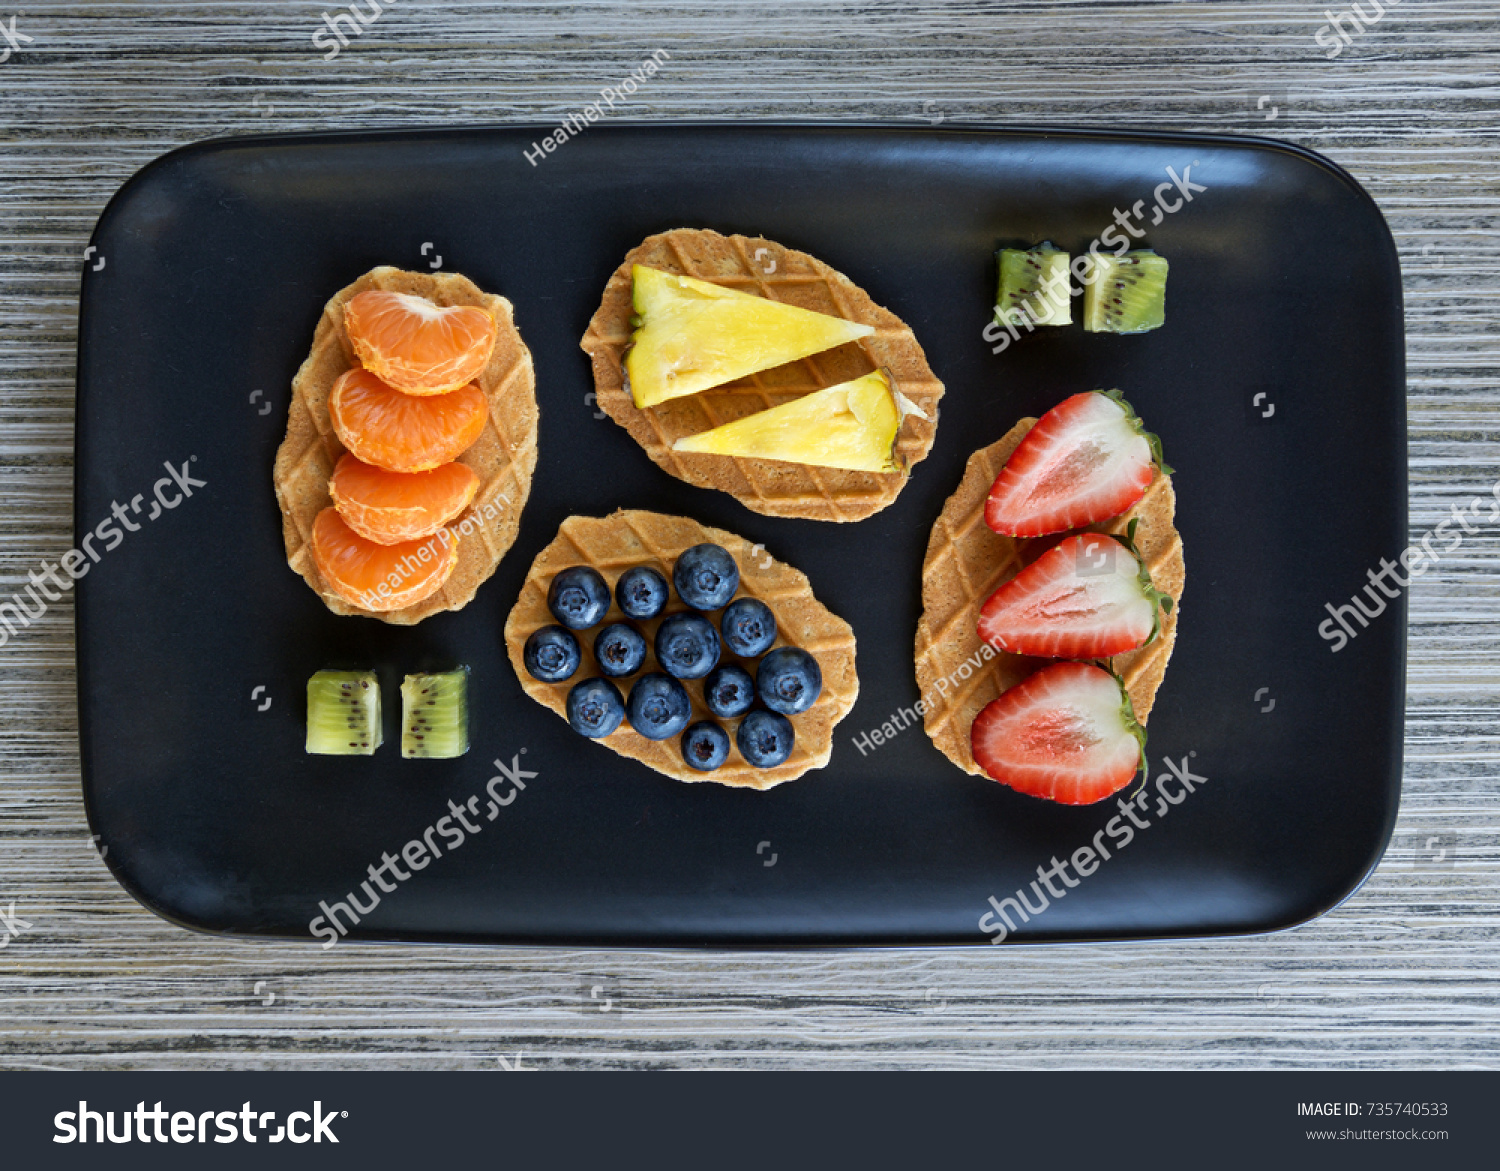 Fruit served on waffles on a black serving dish #735740533